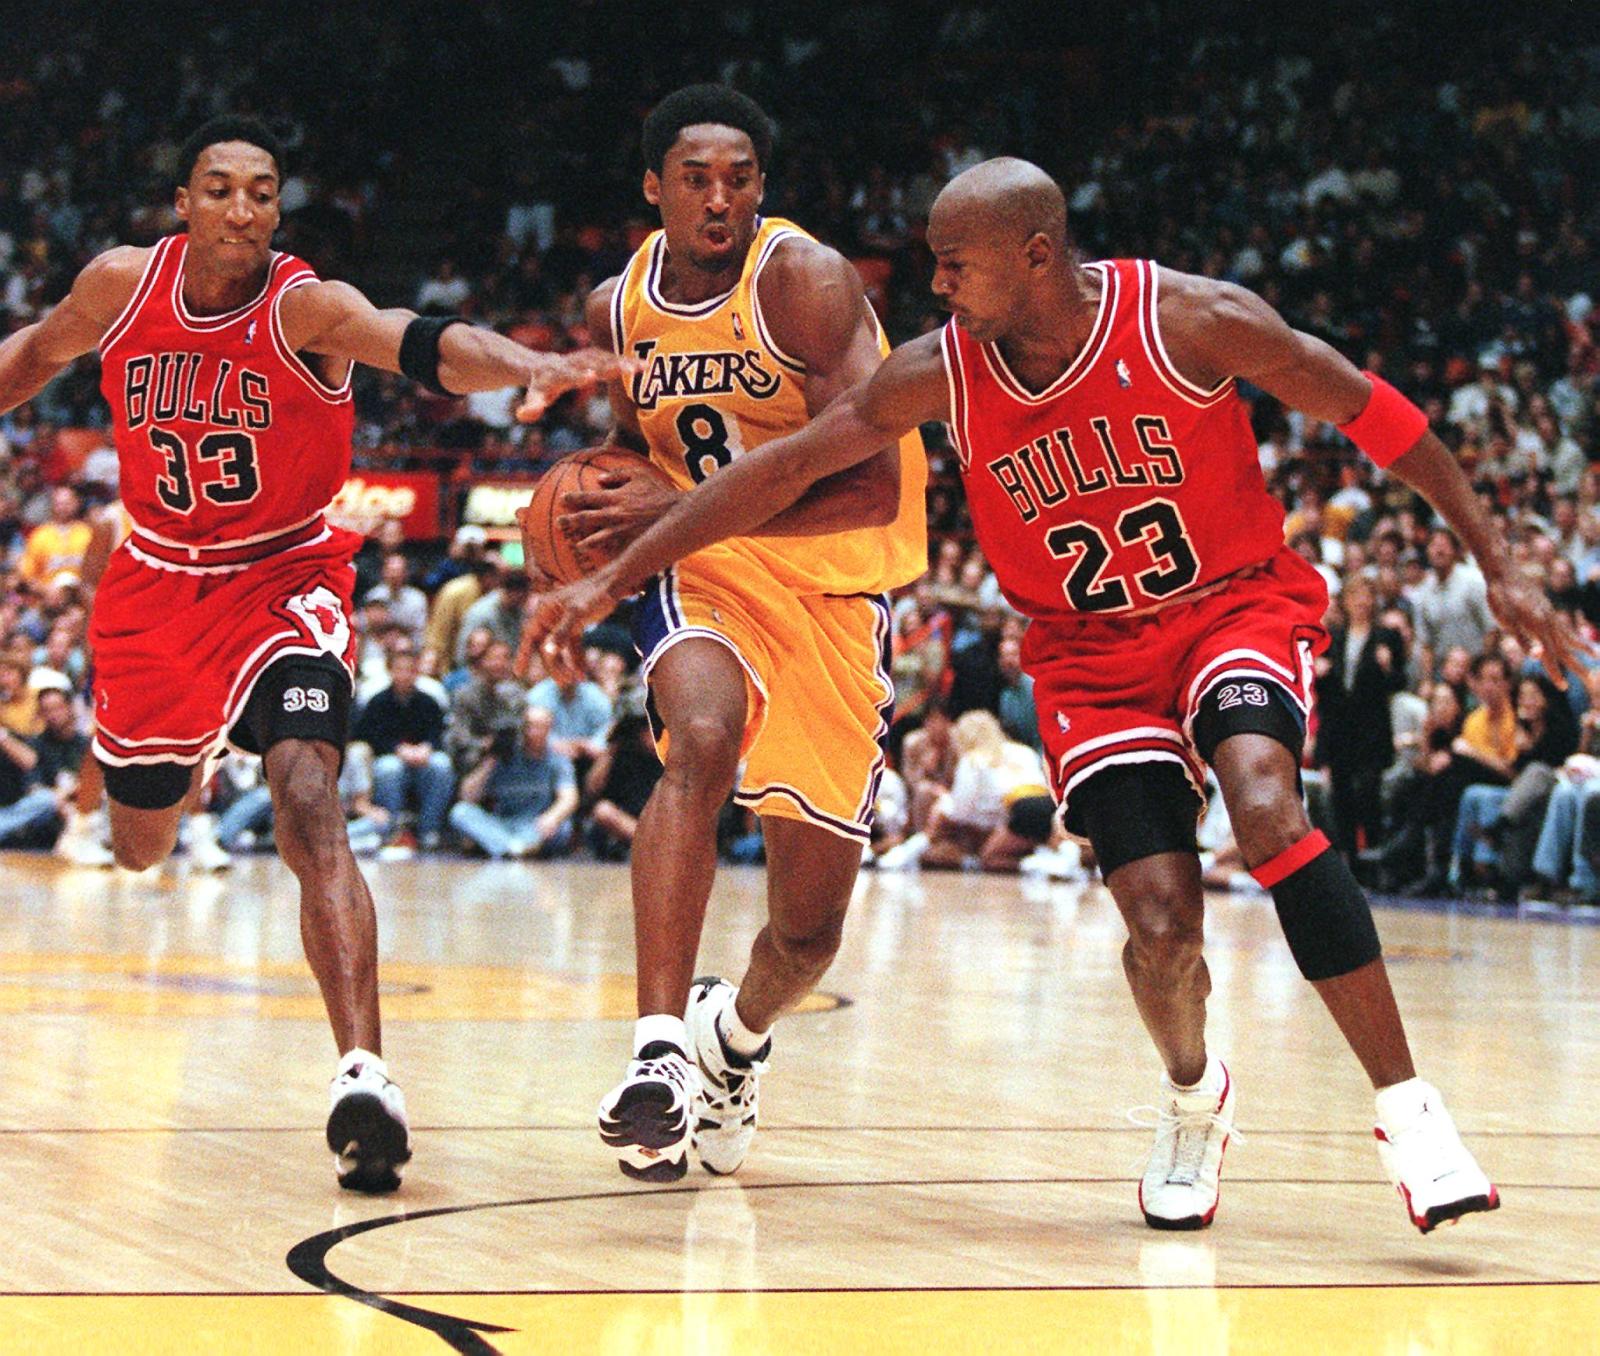 Kobe Bryant: Inside the Lakers star's killer instinct, desire to